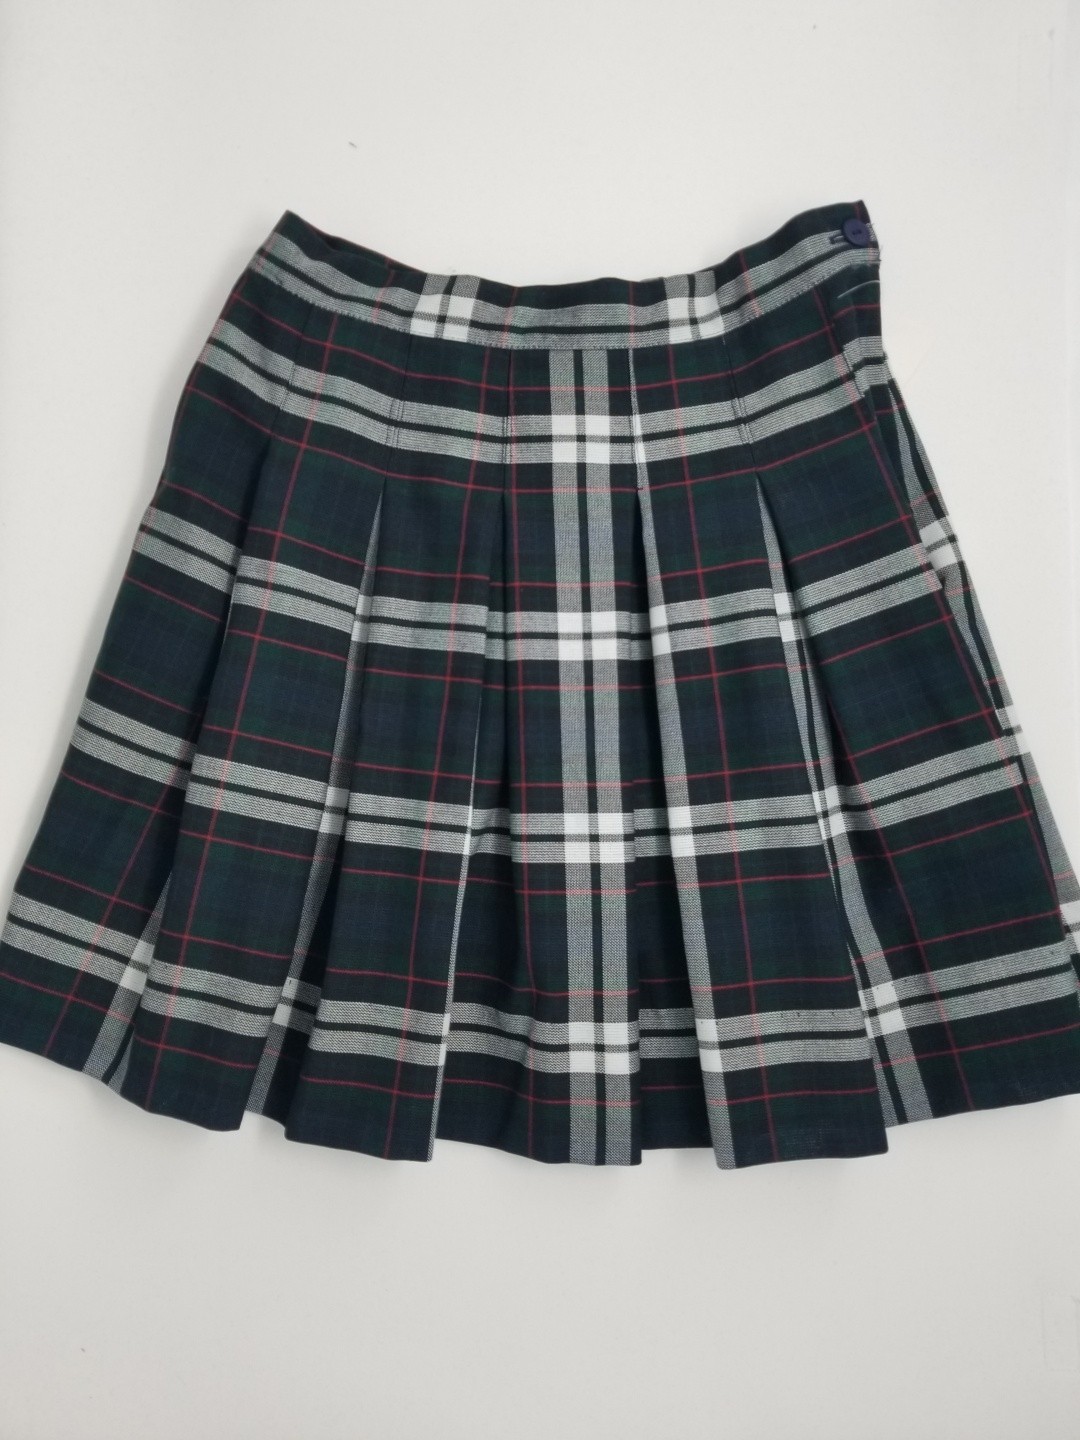 Stitch Down Pleat Skirt- Style 11-Plaid 69